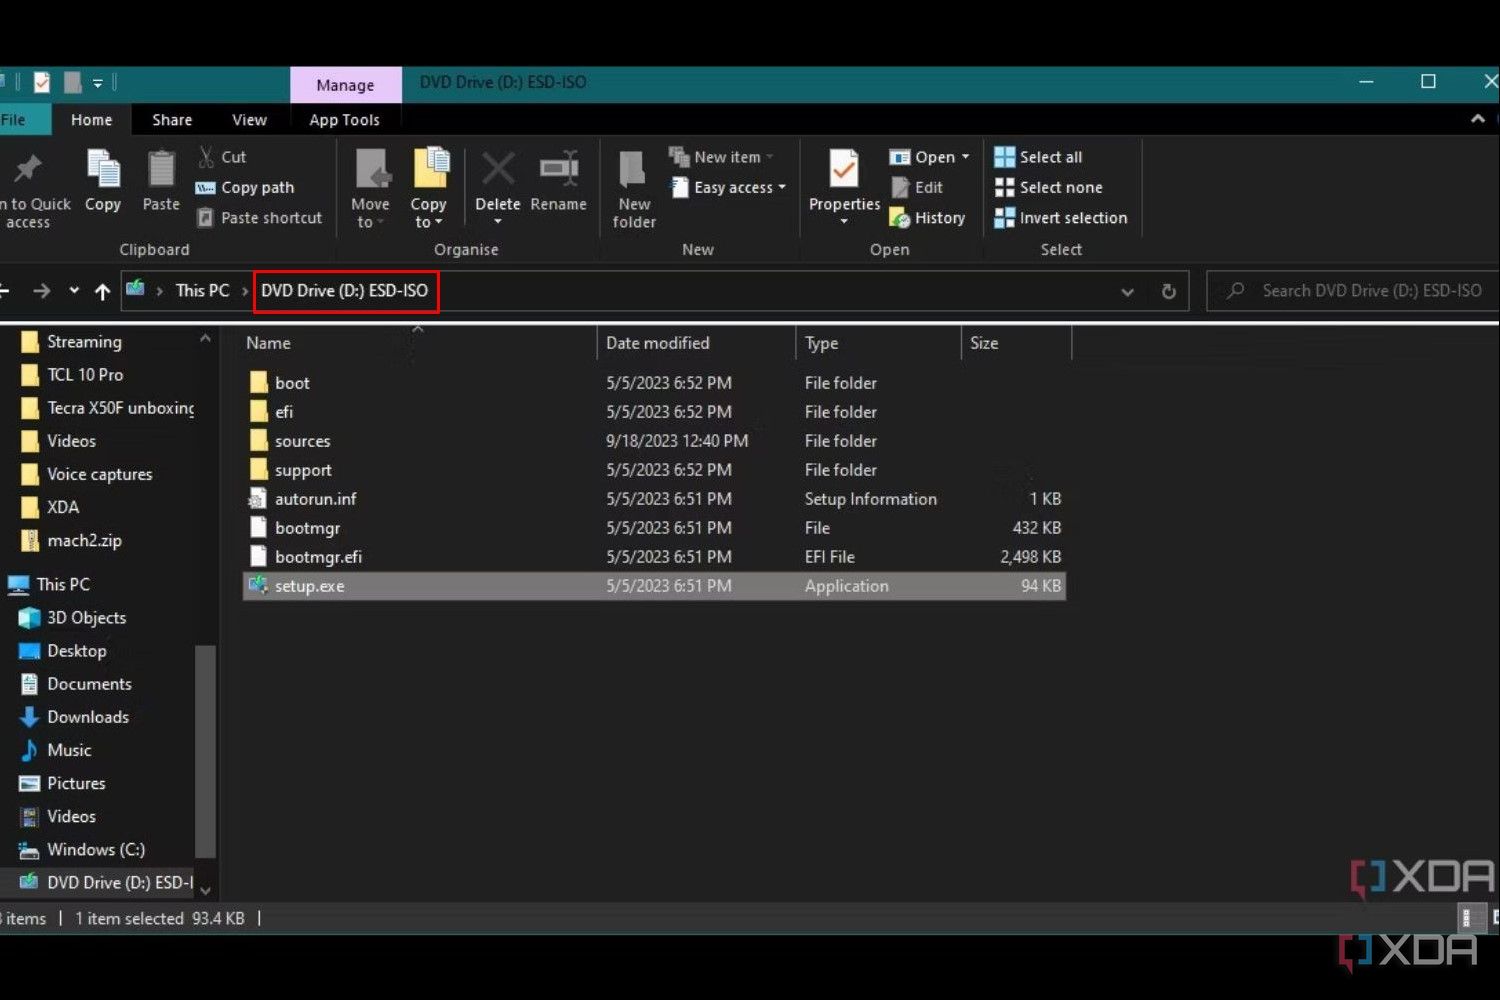 Windows 11 File Explorer screenshot that highlights the DVD Drive.